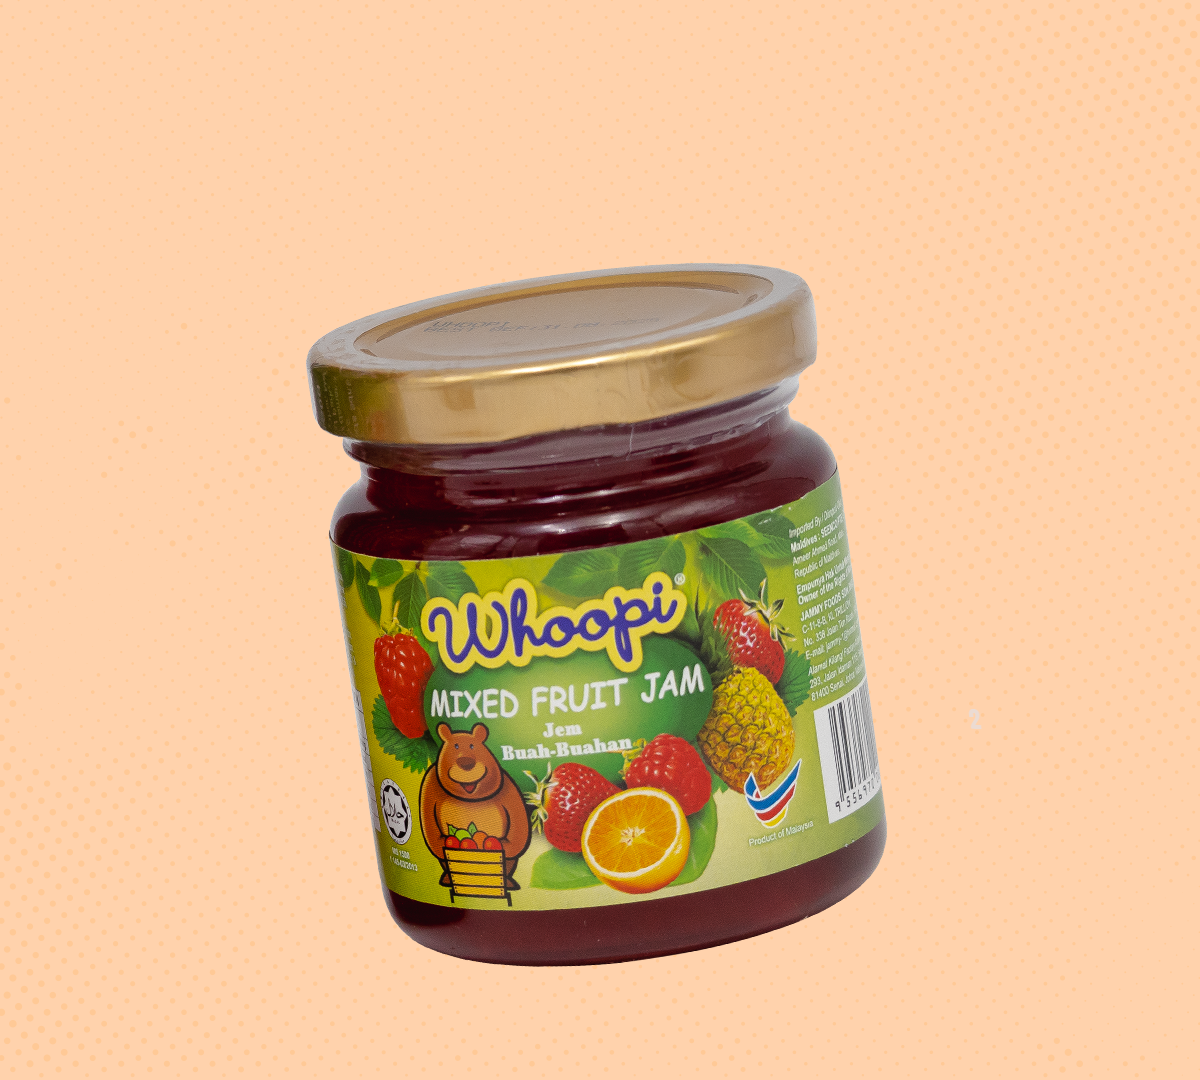 Whoopi Mixed Fruit Jam 240g